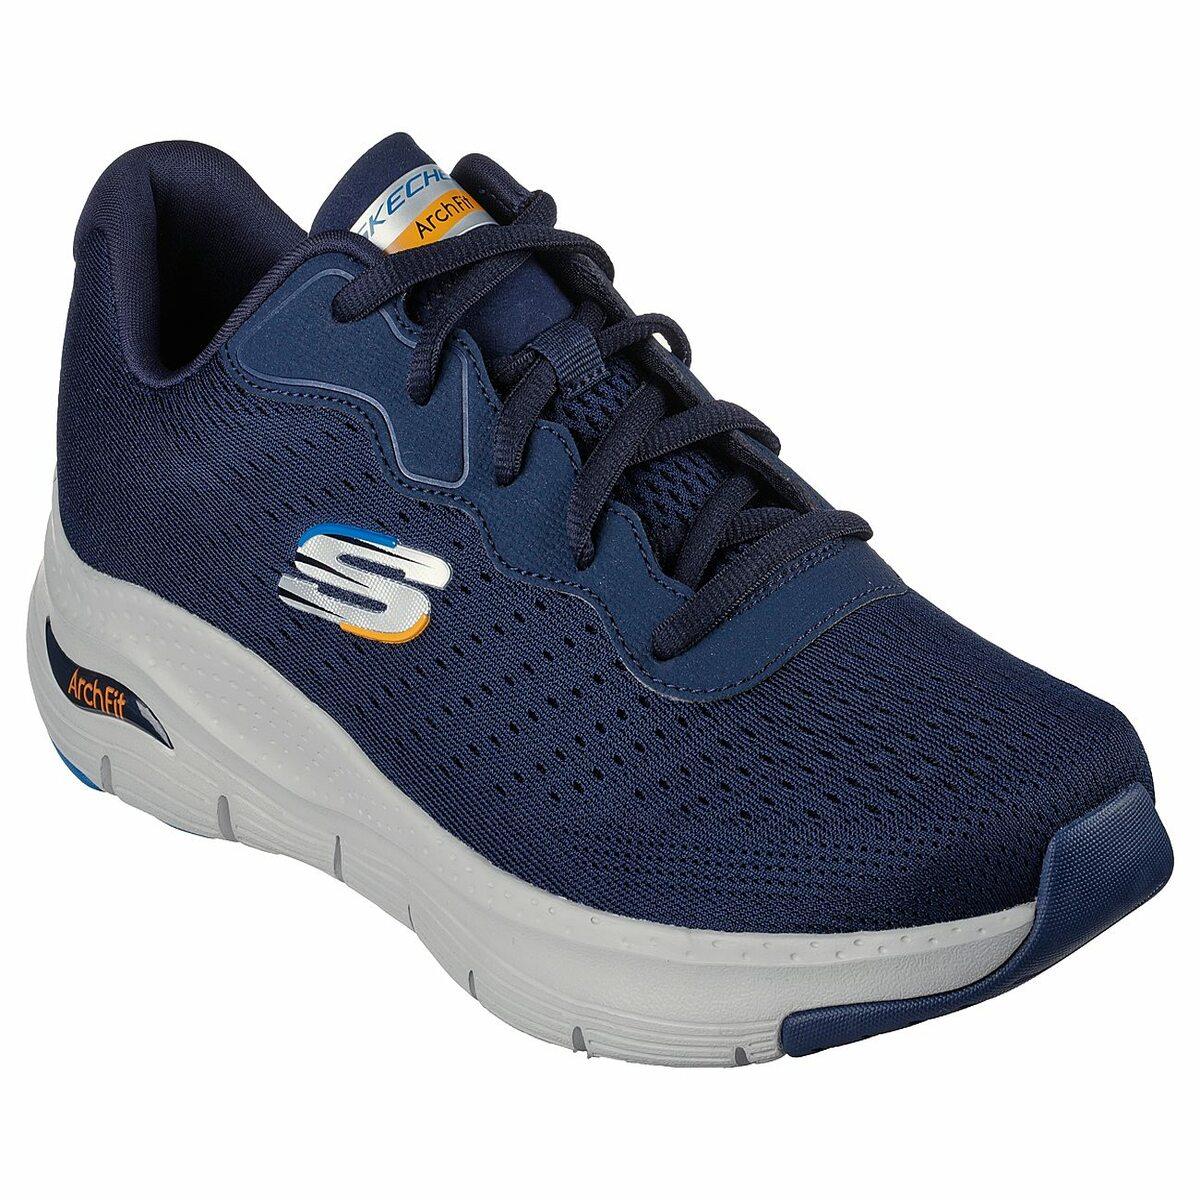 Buy Men Blue Sports Walking Shoes Online | SKU: 158-232303-17-10-Metro Shoes